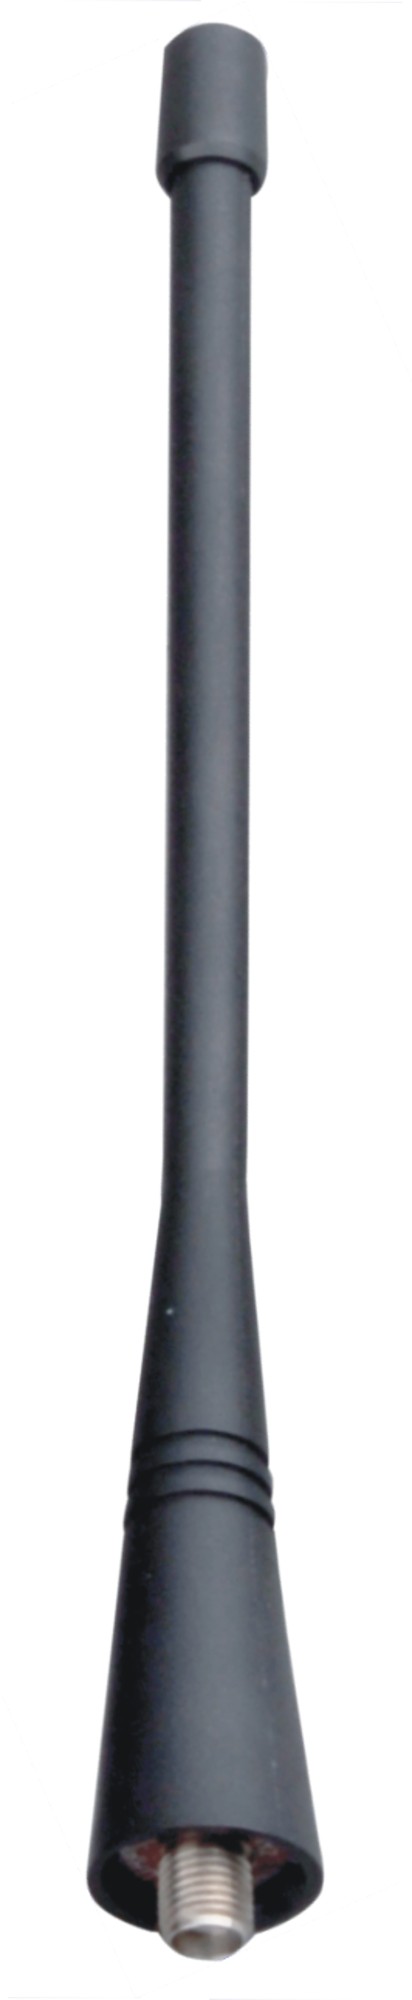 HYTERA UHF Antenne 16 cm, SMA-Buchse, 450-520 MHz AN0495W04 580002045006